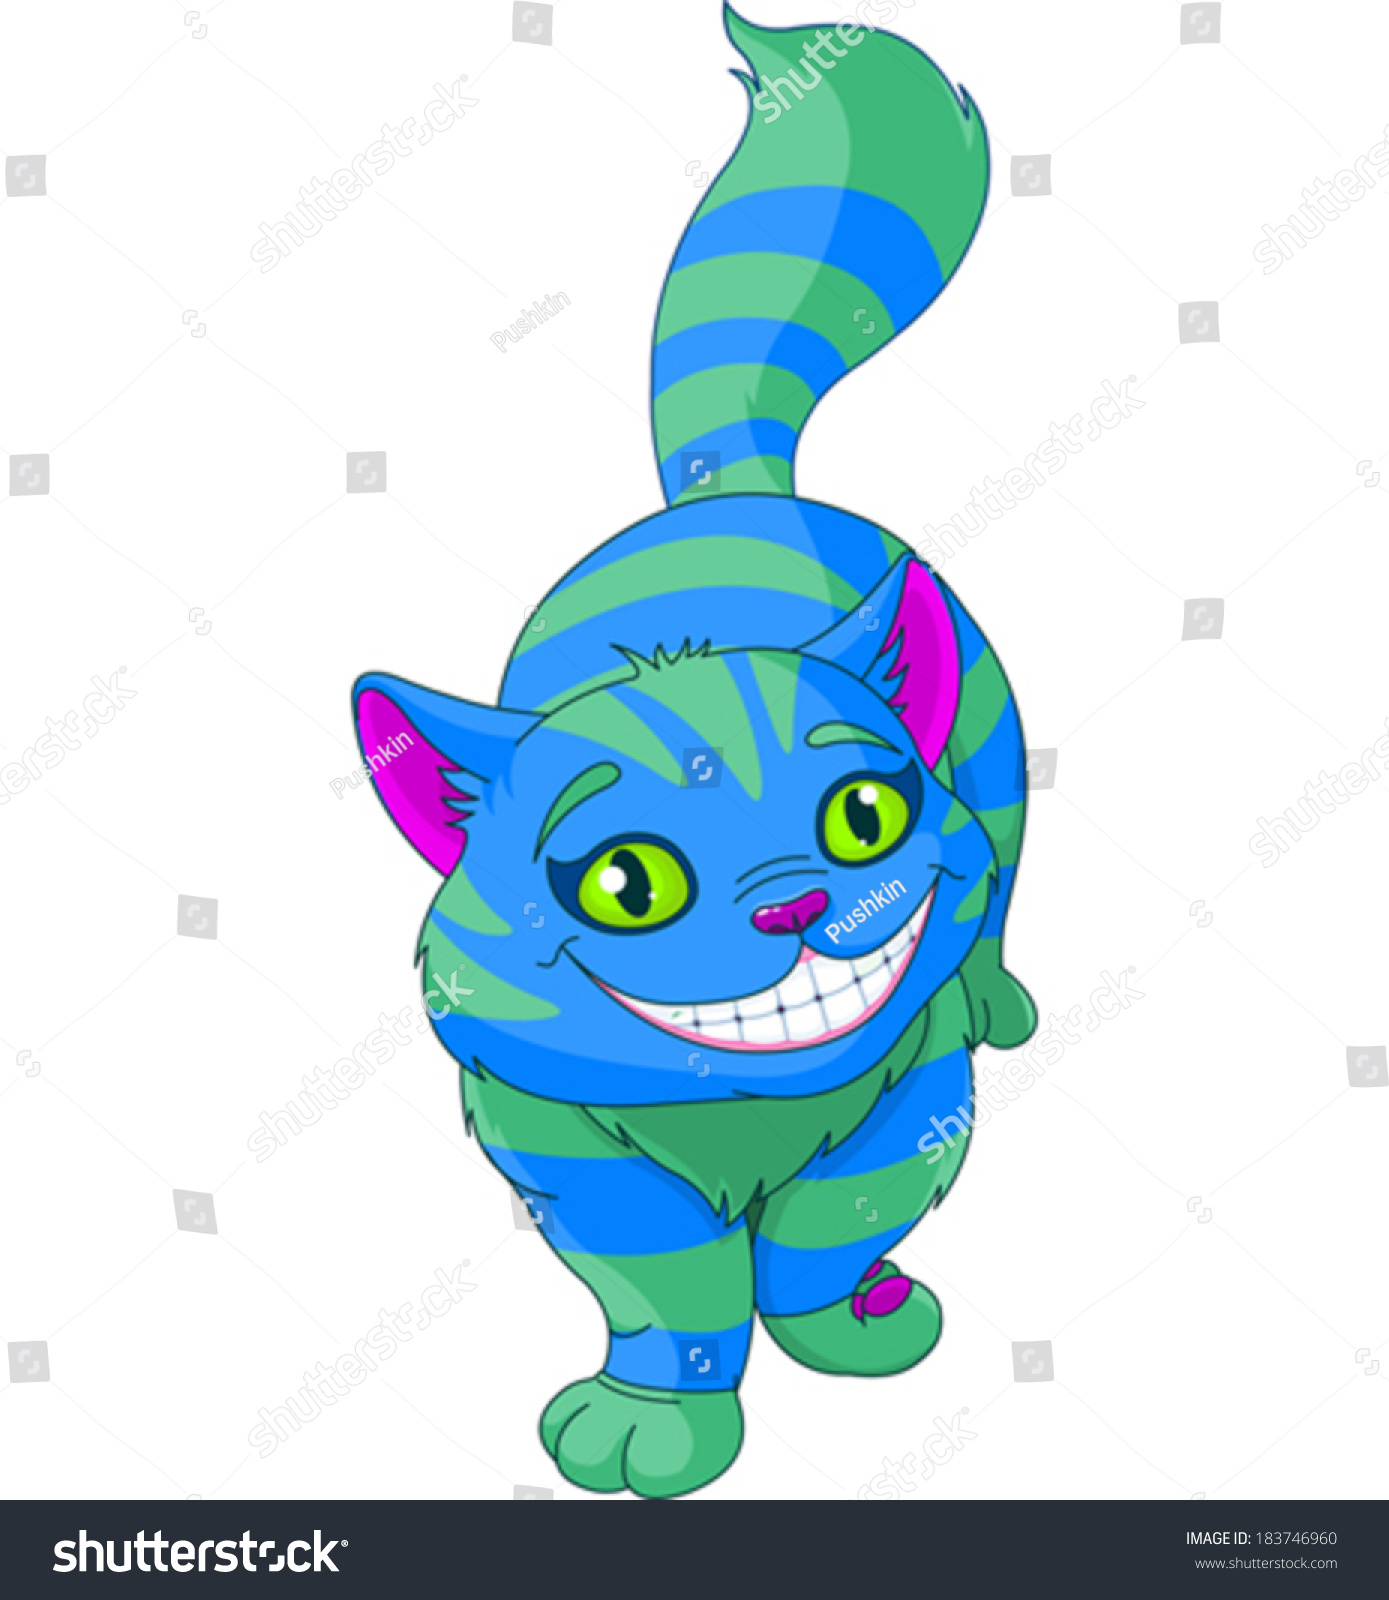 SVG of Illustration of walking Cheshire Cat  svg